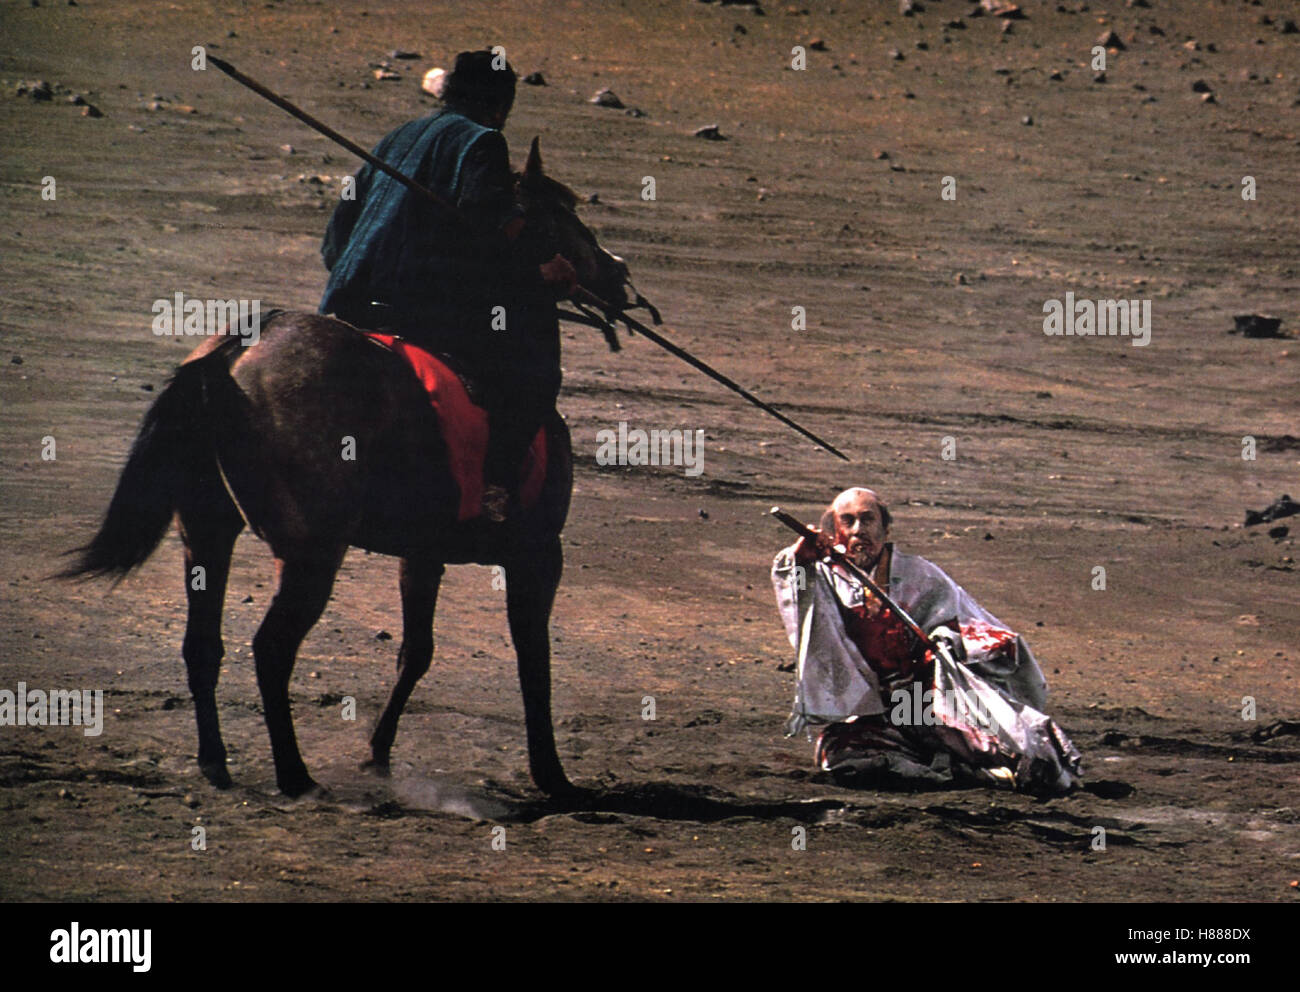 Ran, (RAN) JAP-F 1985, Regie: Akira Kurosawa, Szene, Stichwort: Pferd, Reiter, Lanze, Töten, Opfer, Zweikampf Stock Photo